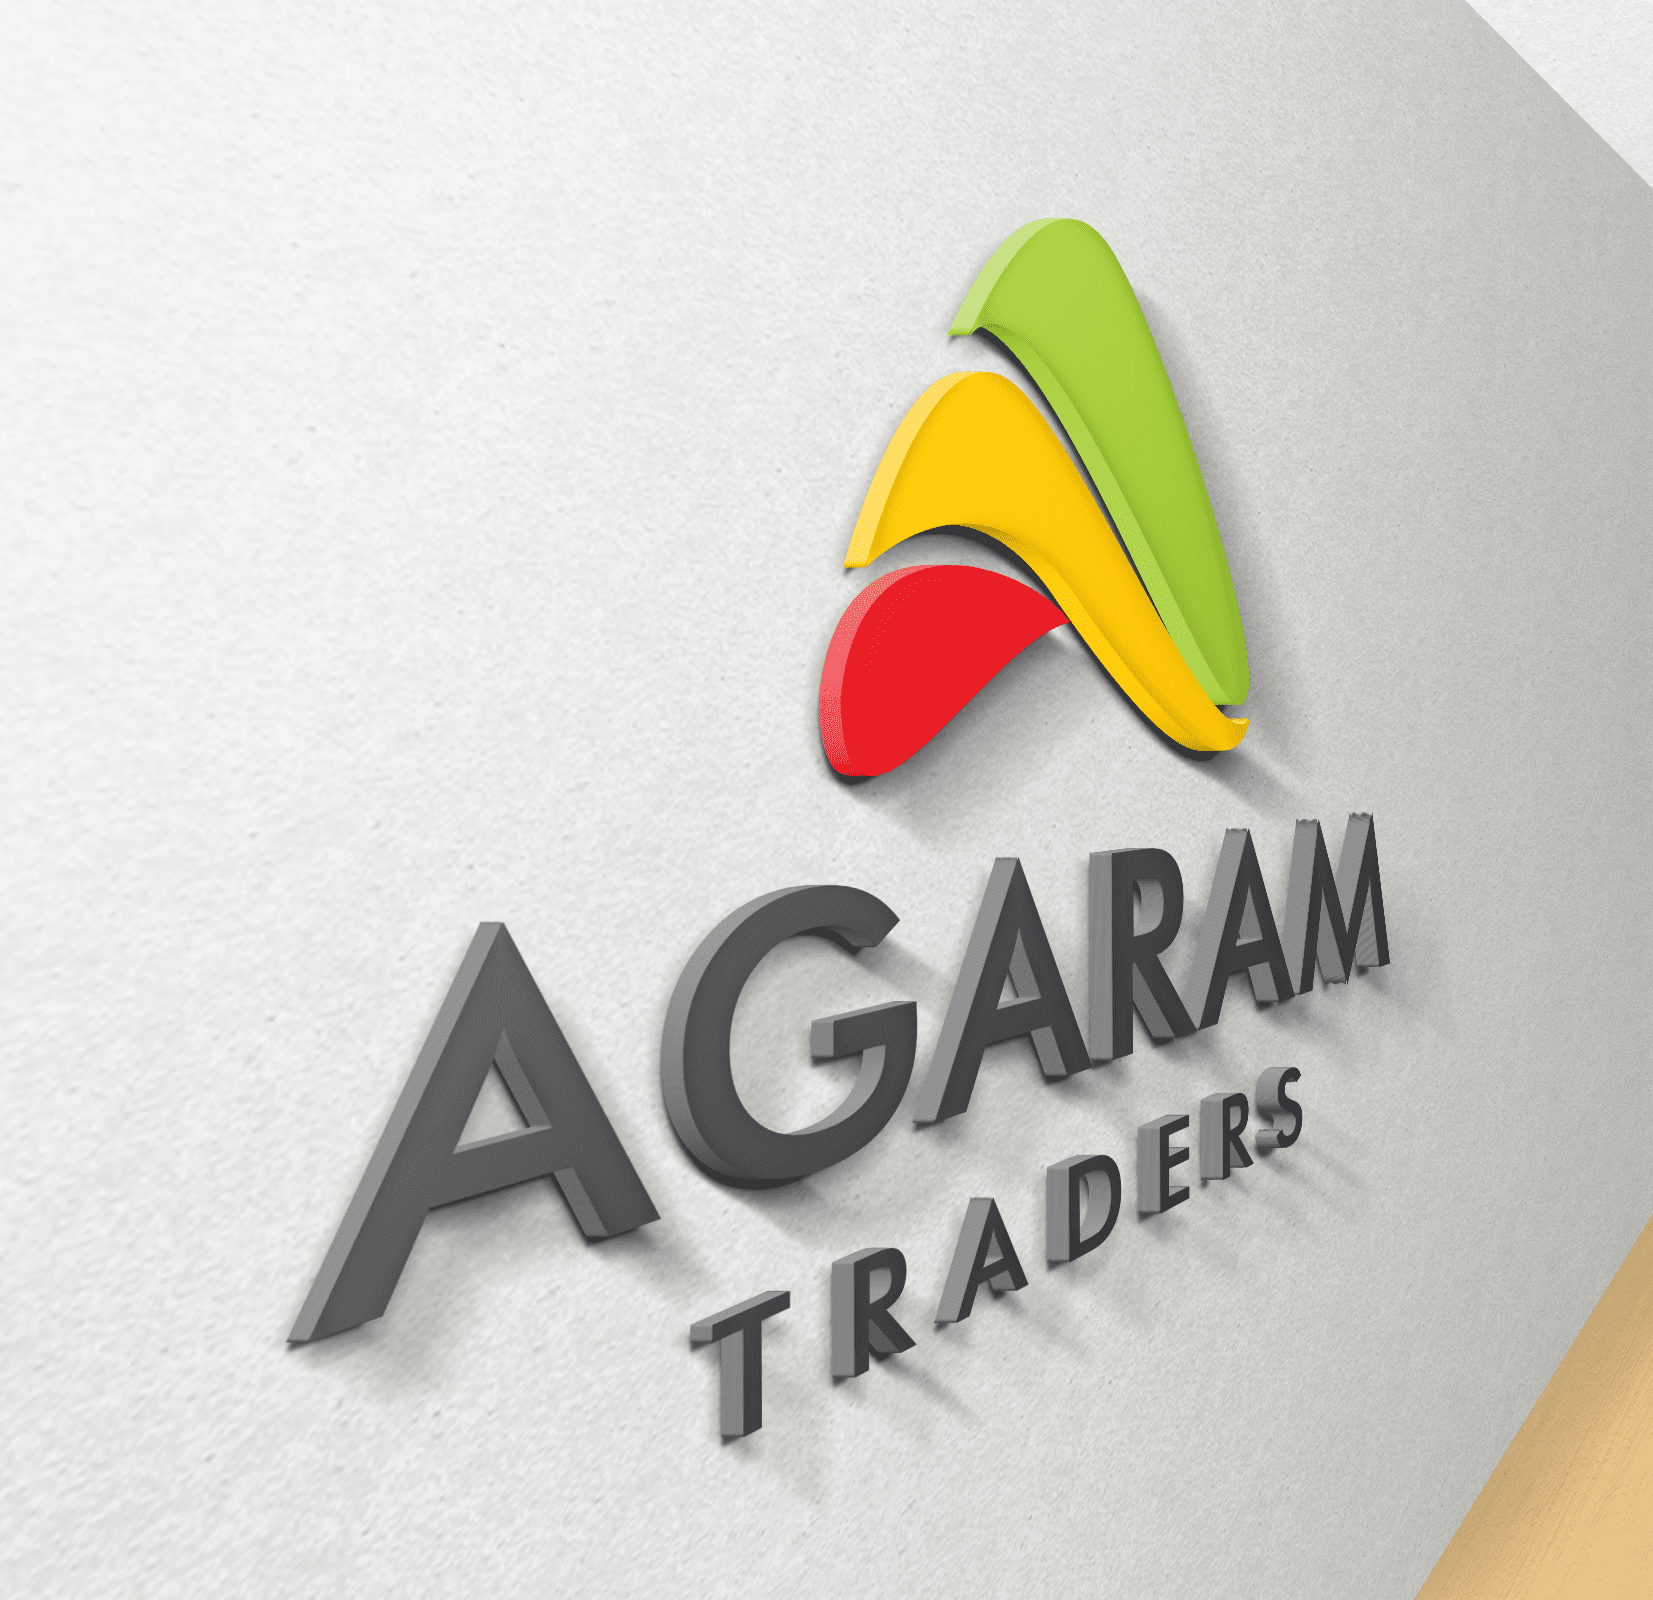 Agaram Traders Office Wall Logo Branding & Packaging Design in Chennai by Violet Spark